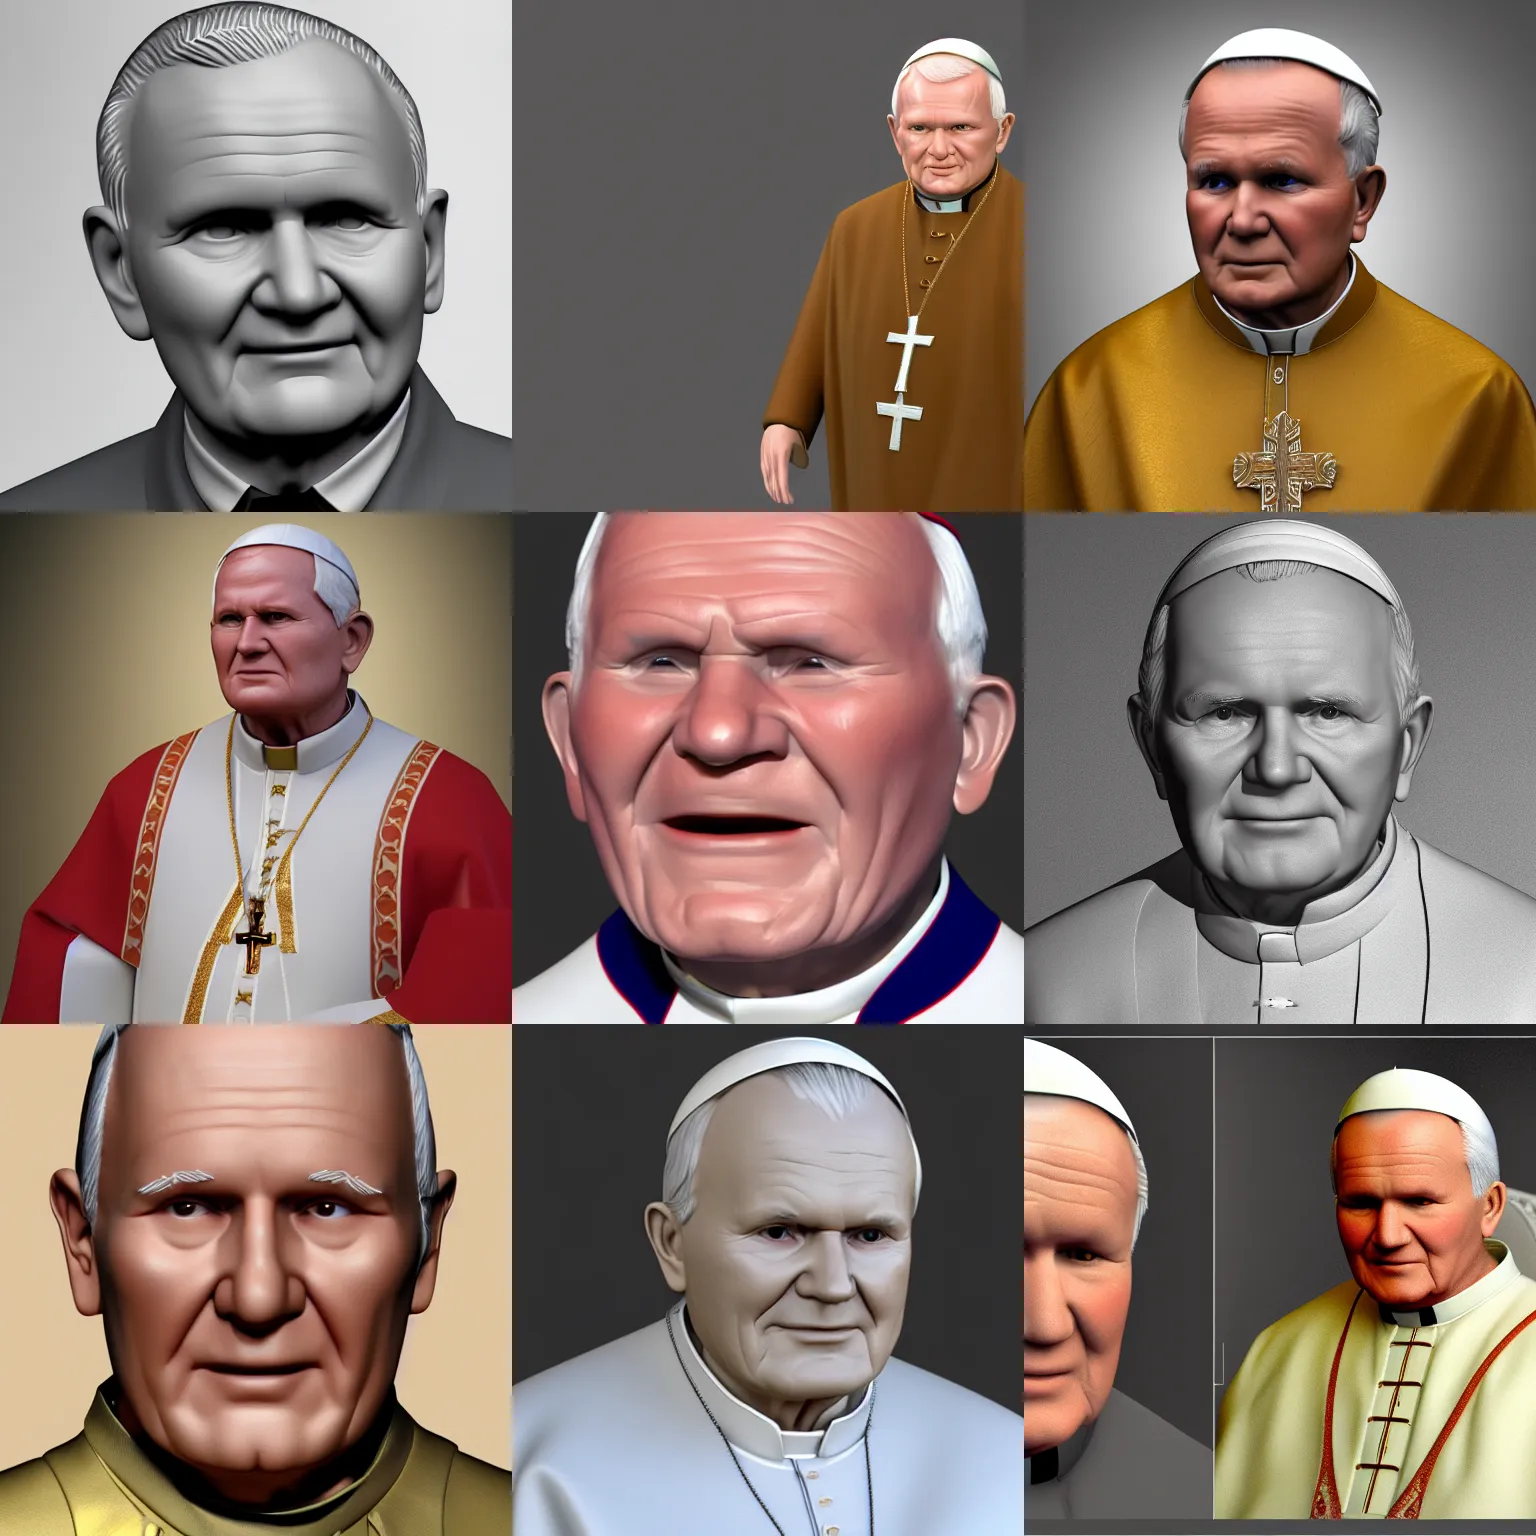 Prompt: 3D render of John Paul II